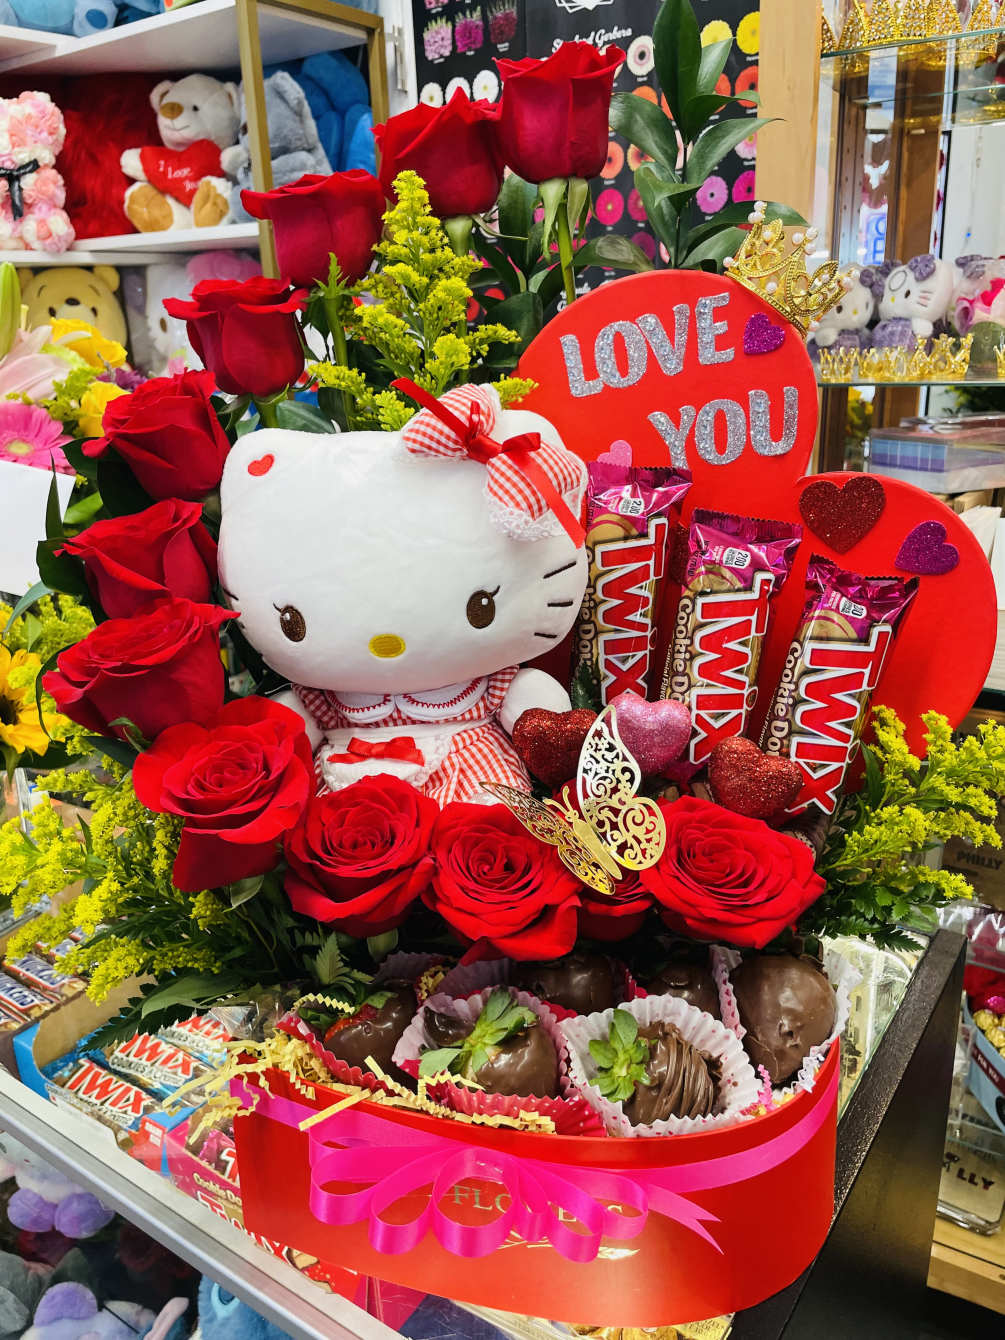 A fan of Hello Kitty? This stunning arrangement includes a little bit